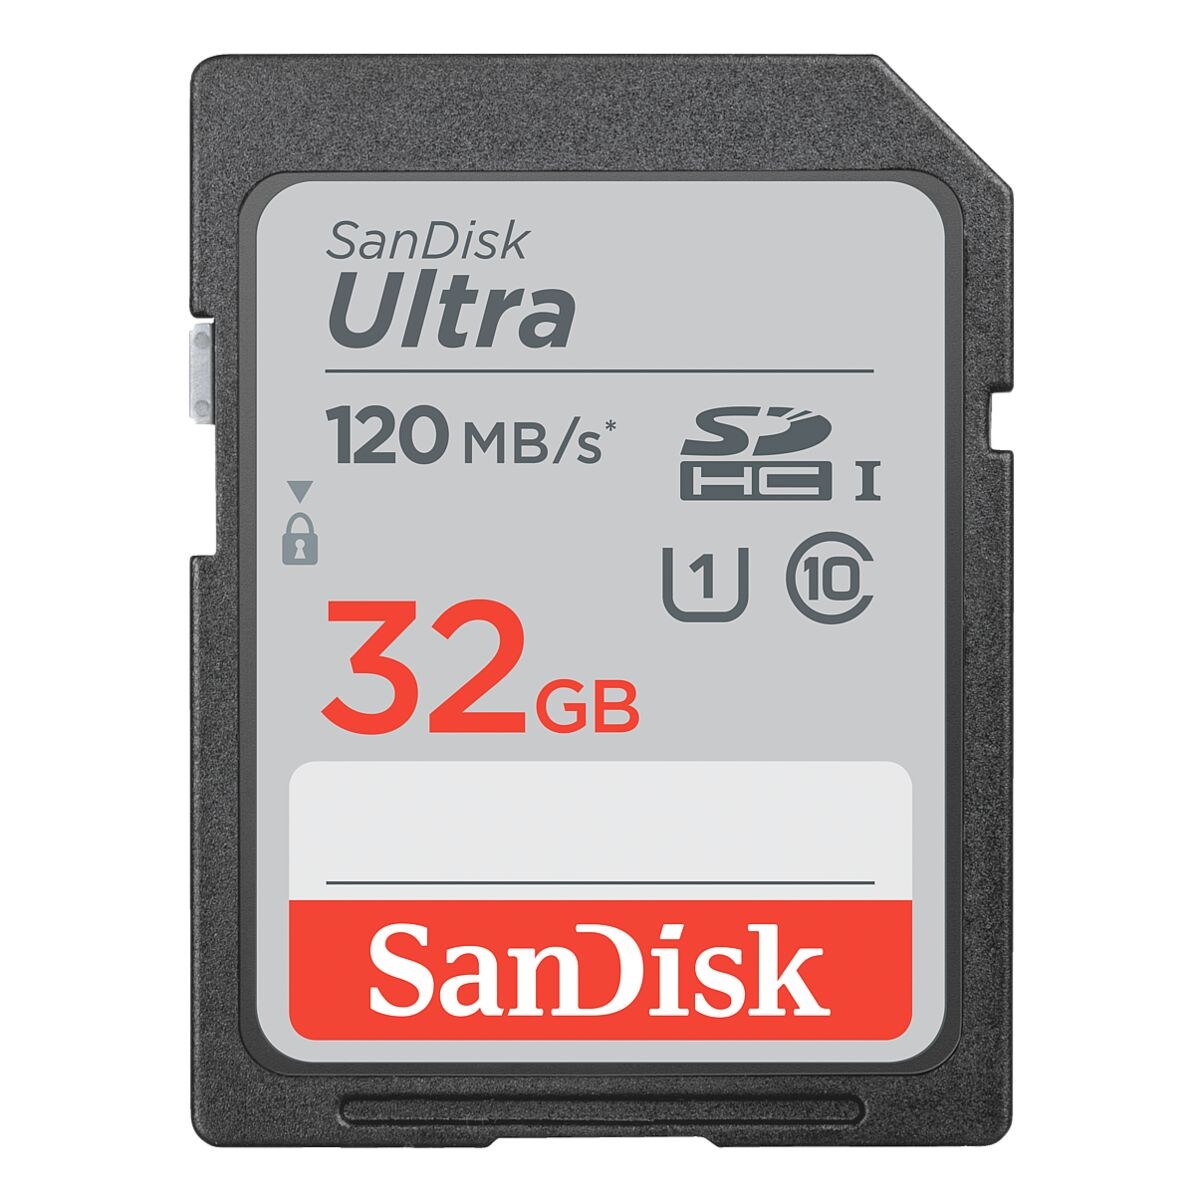 SanDisk microSDXC-geheugenkaart Ultra 32 GB - 120 MB/s